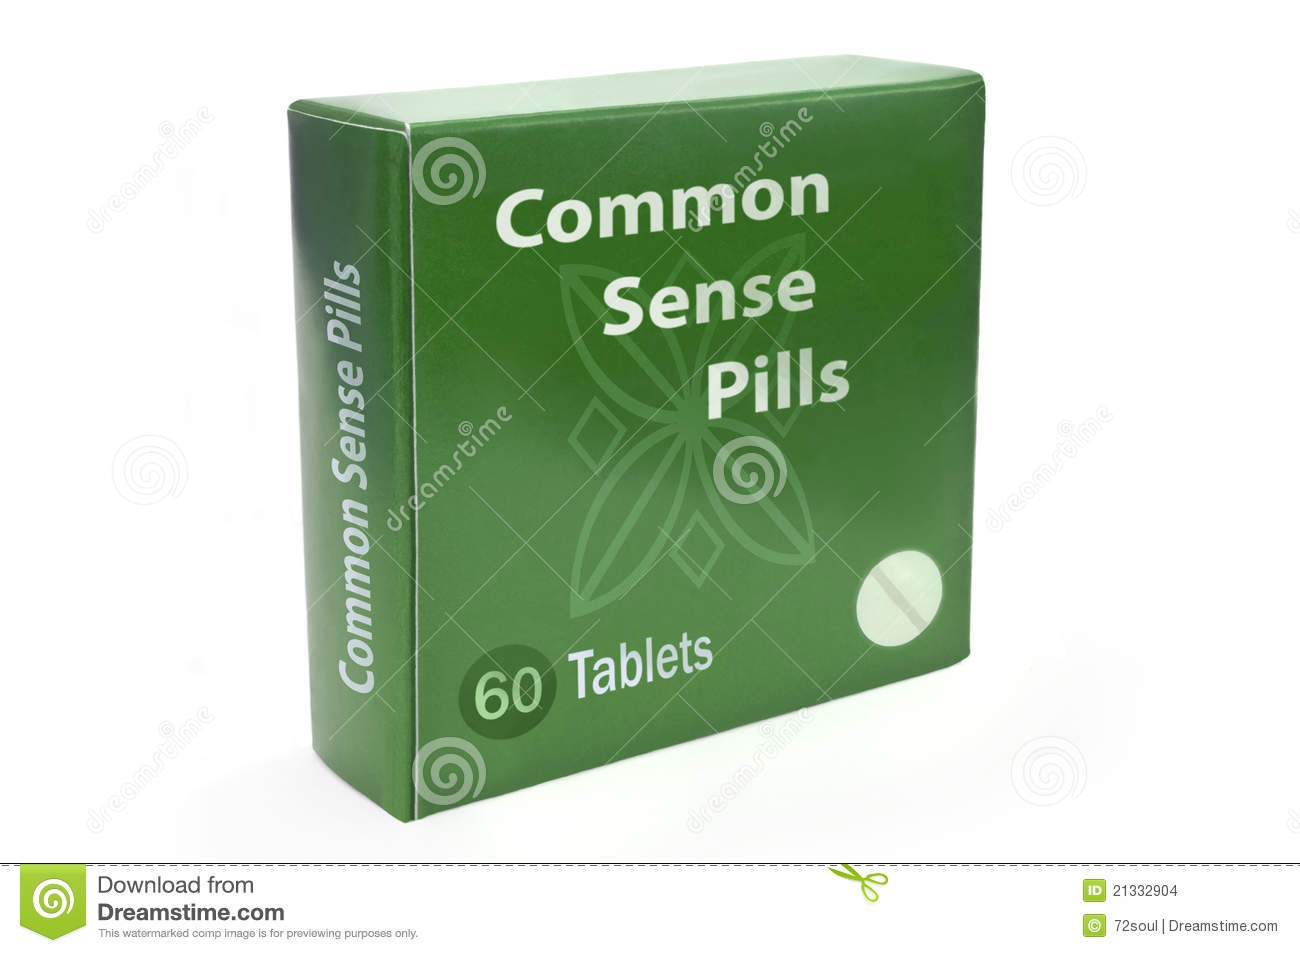 Common Sense Concept  Stock Images   Image  21332904